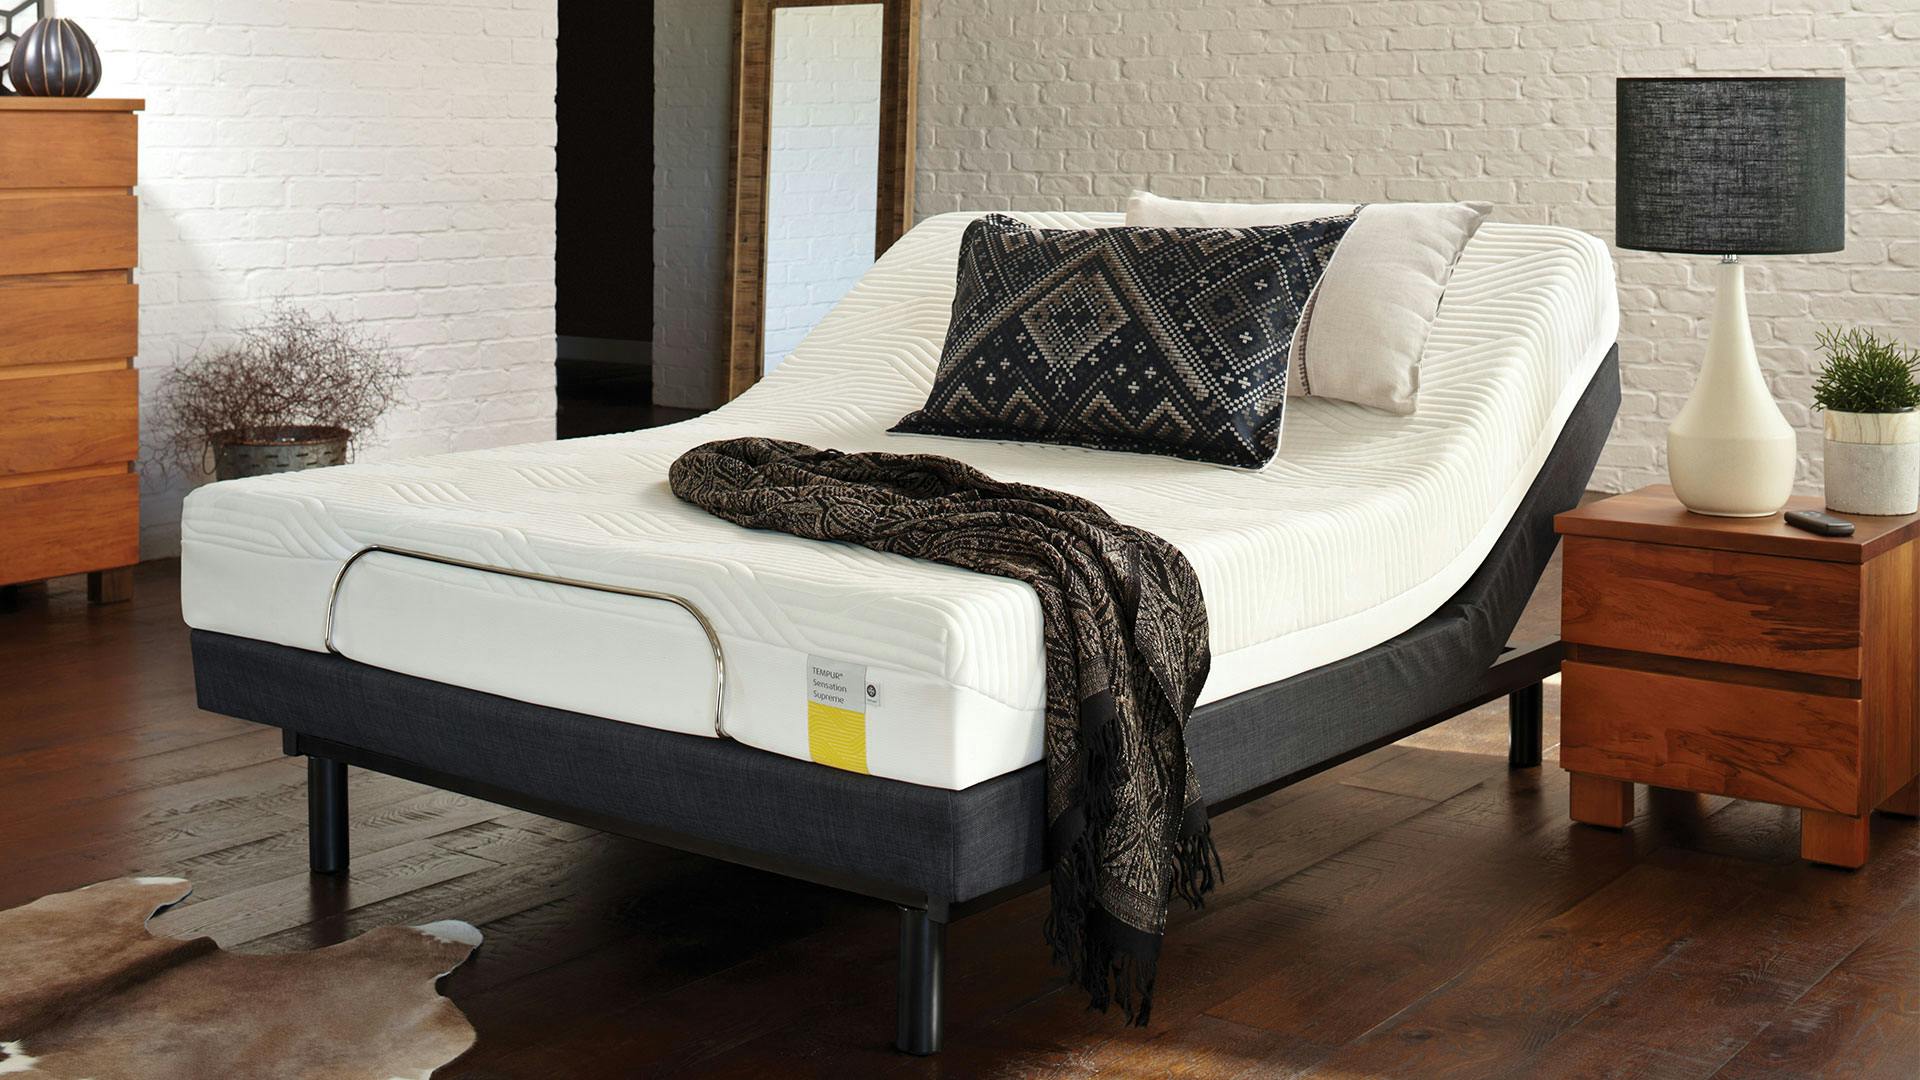 sheets for adjustable queen mattress